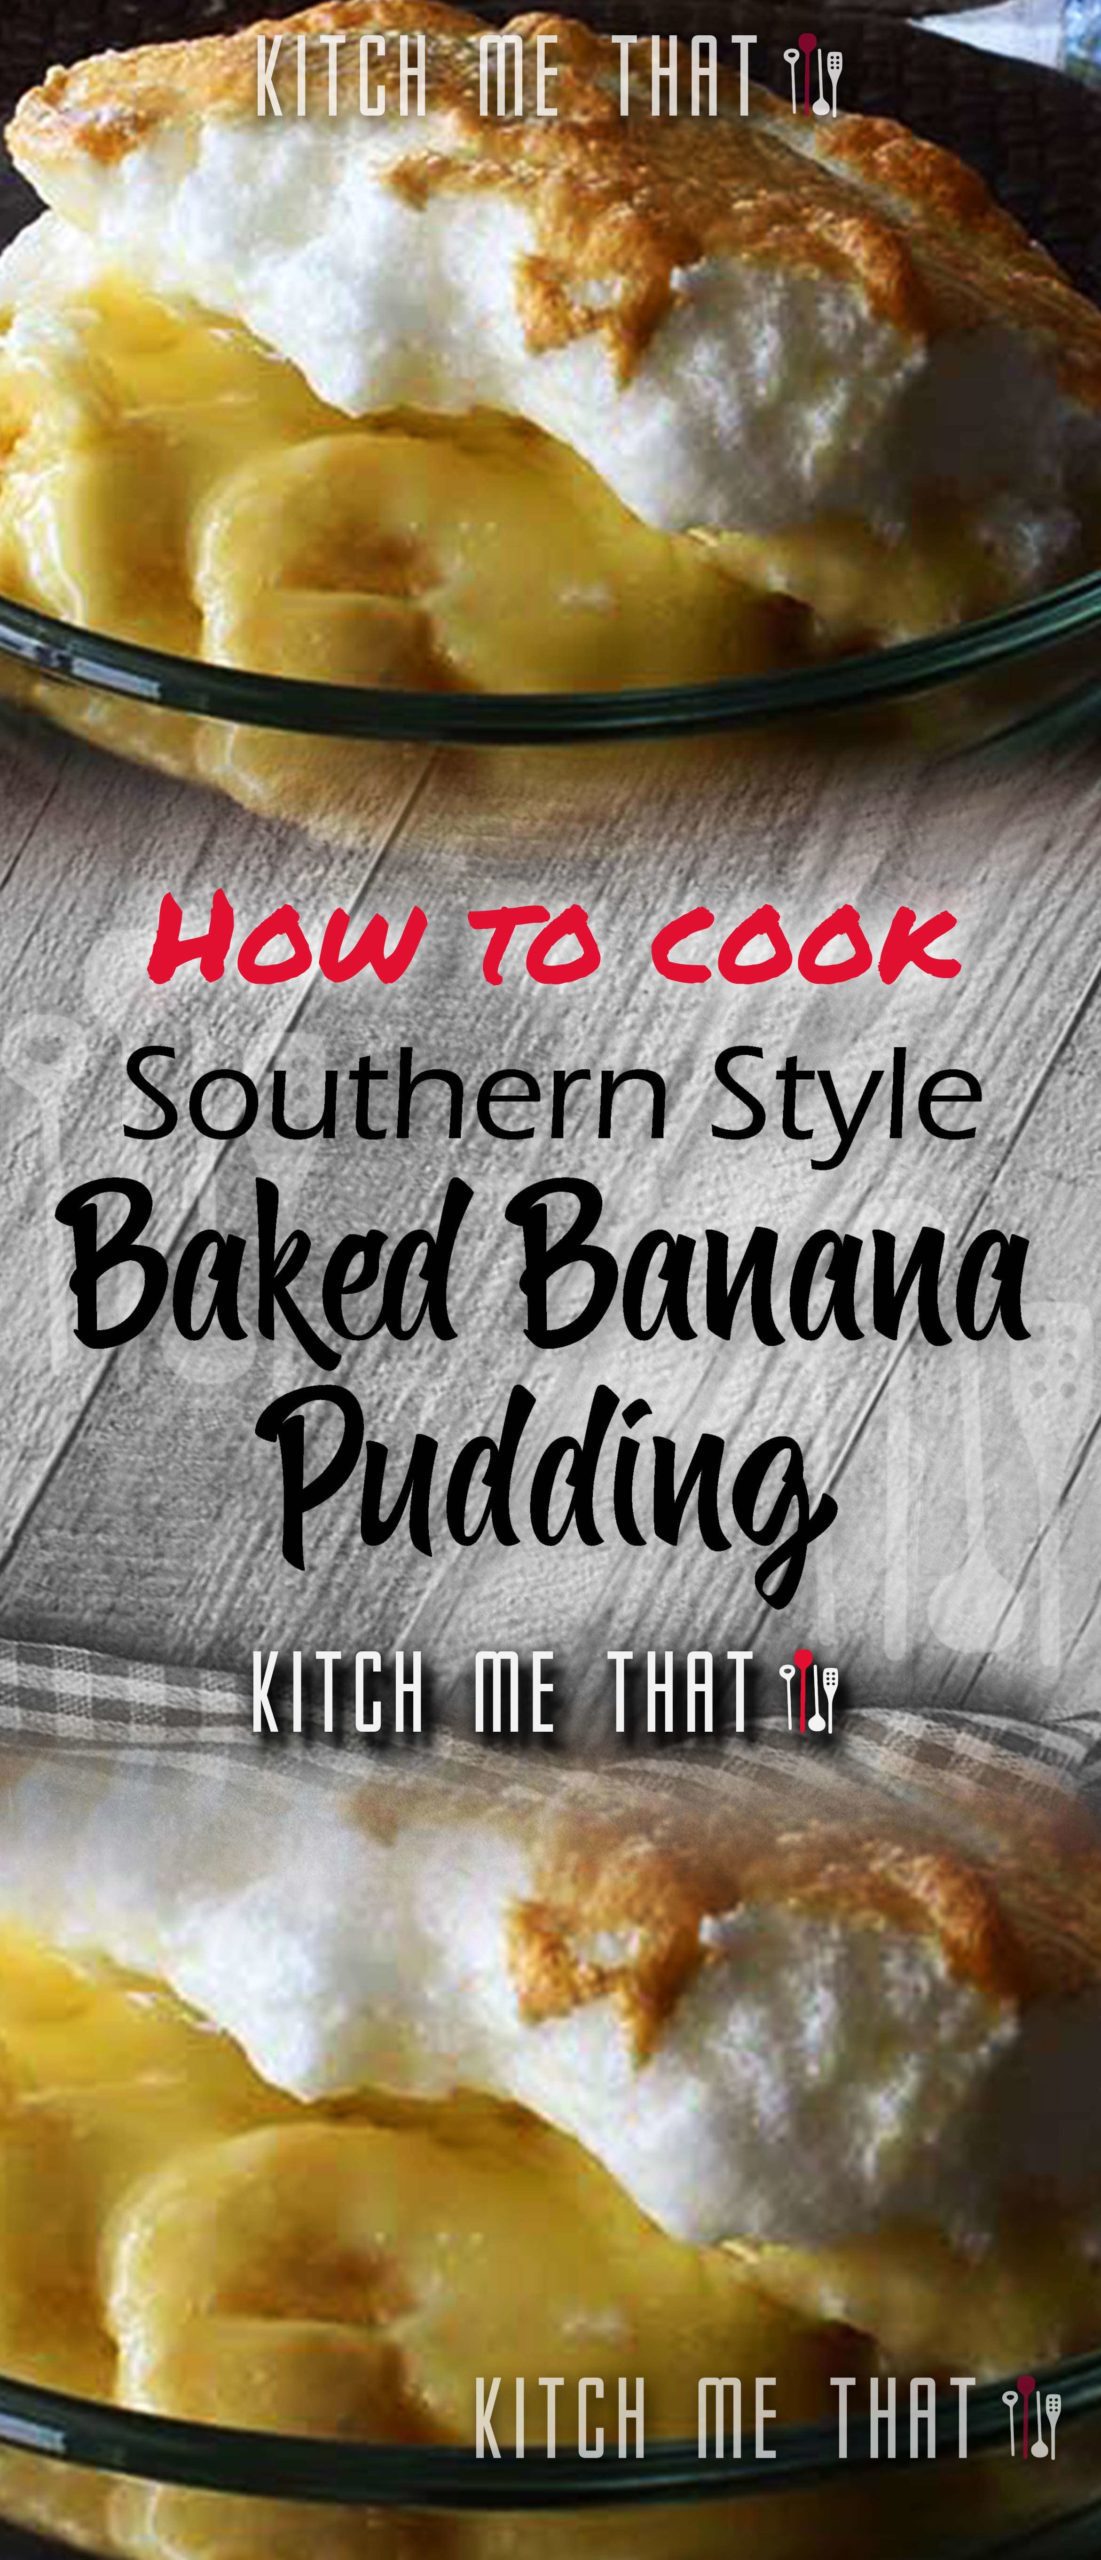 Southern-Style Baked Banana Pudding